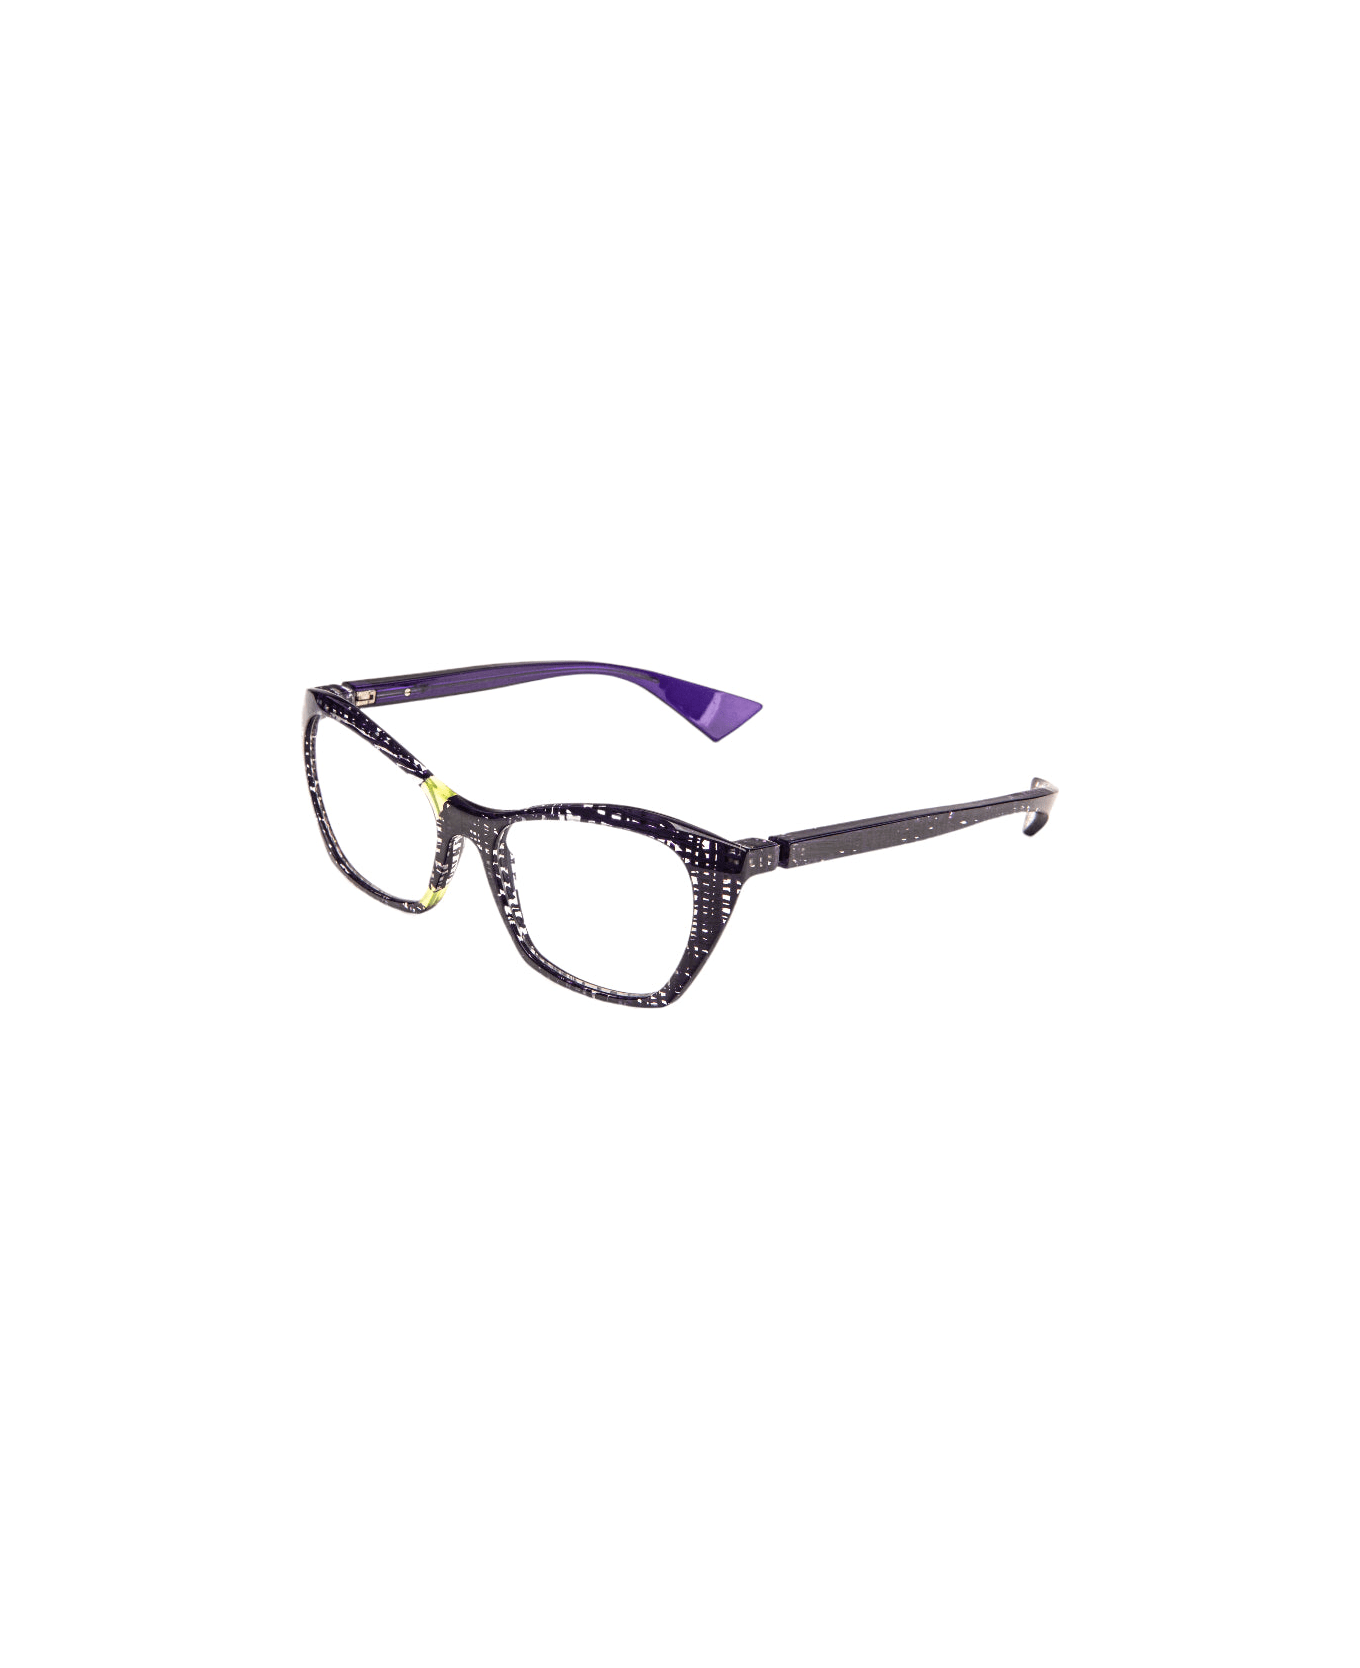 Piero Massaro Pm496 - Knurled Violet Glasses